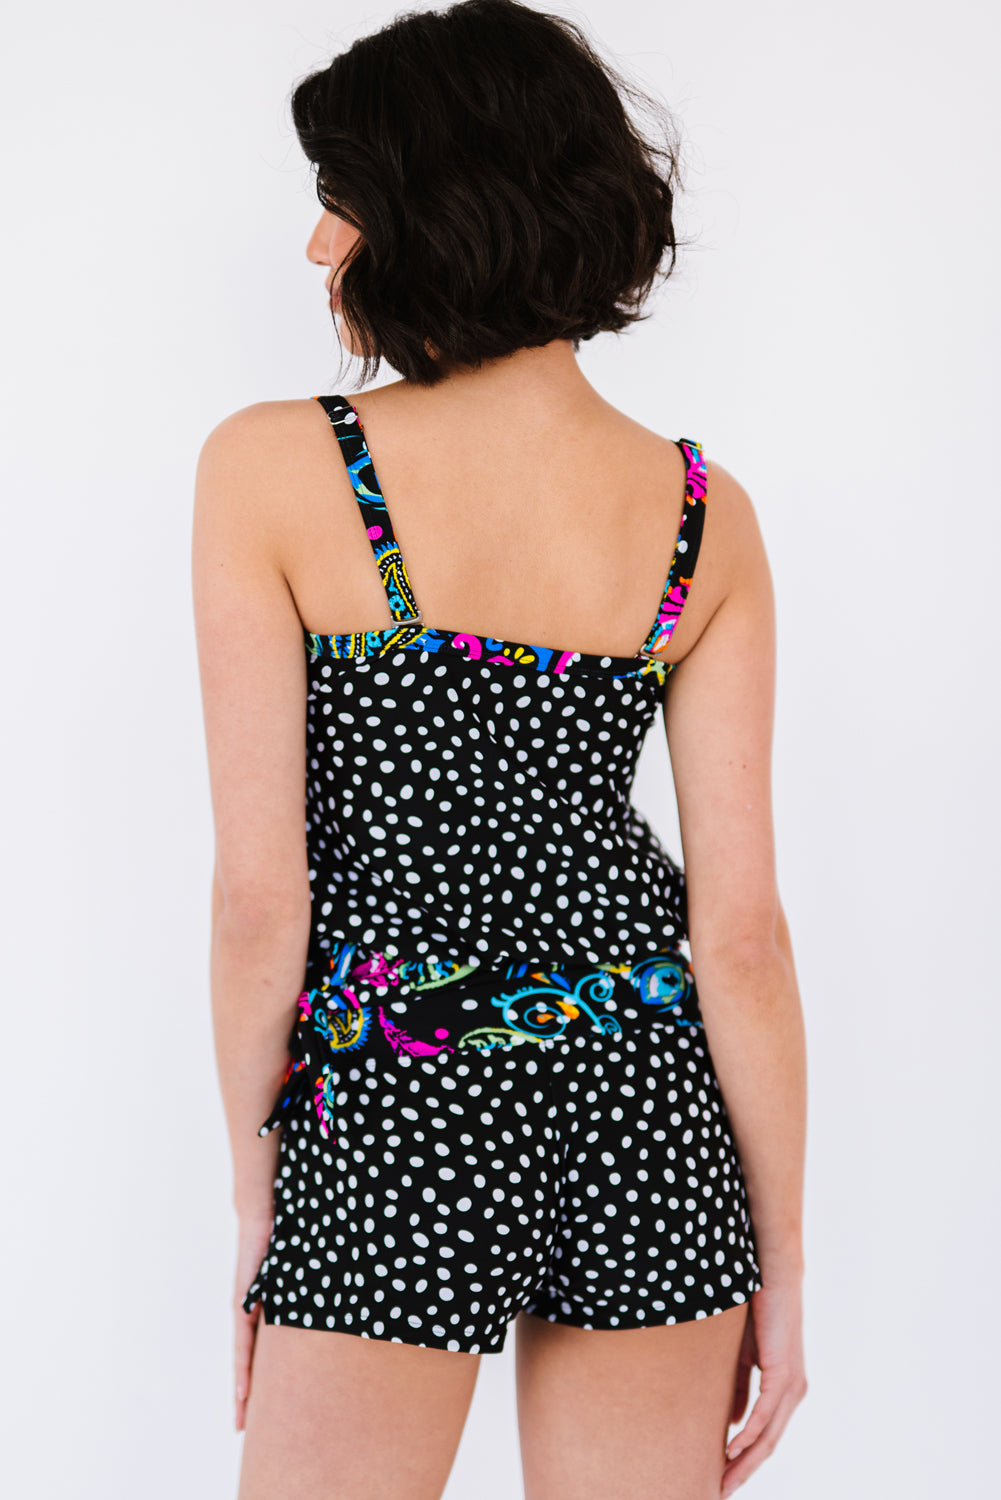 Women's Full Size Printed Tied Tankini Set